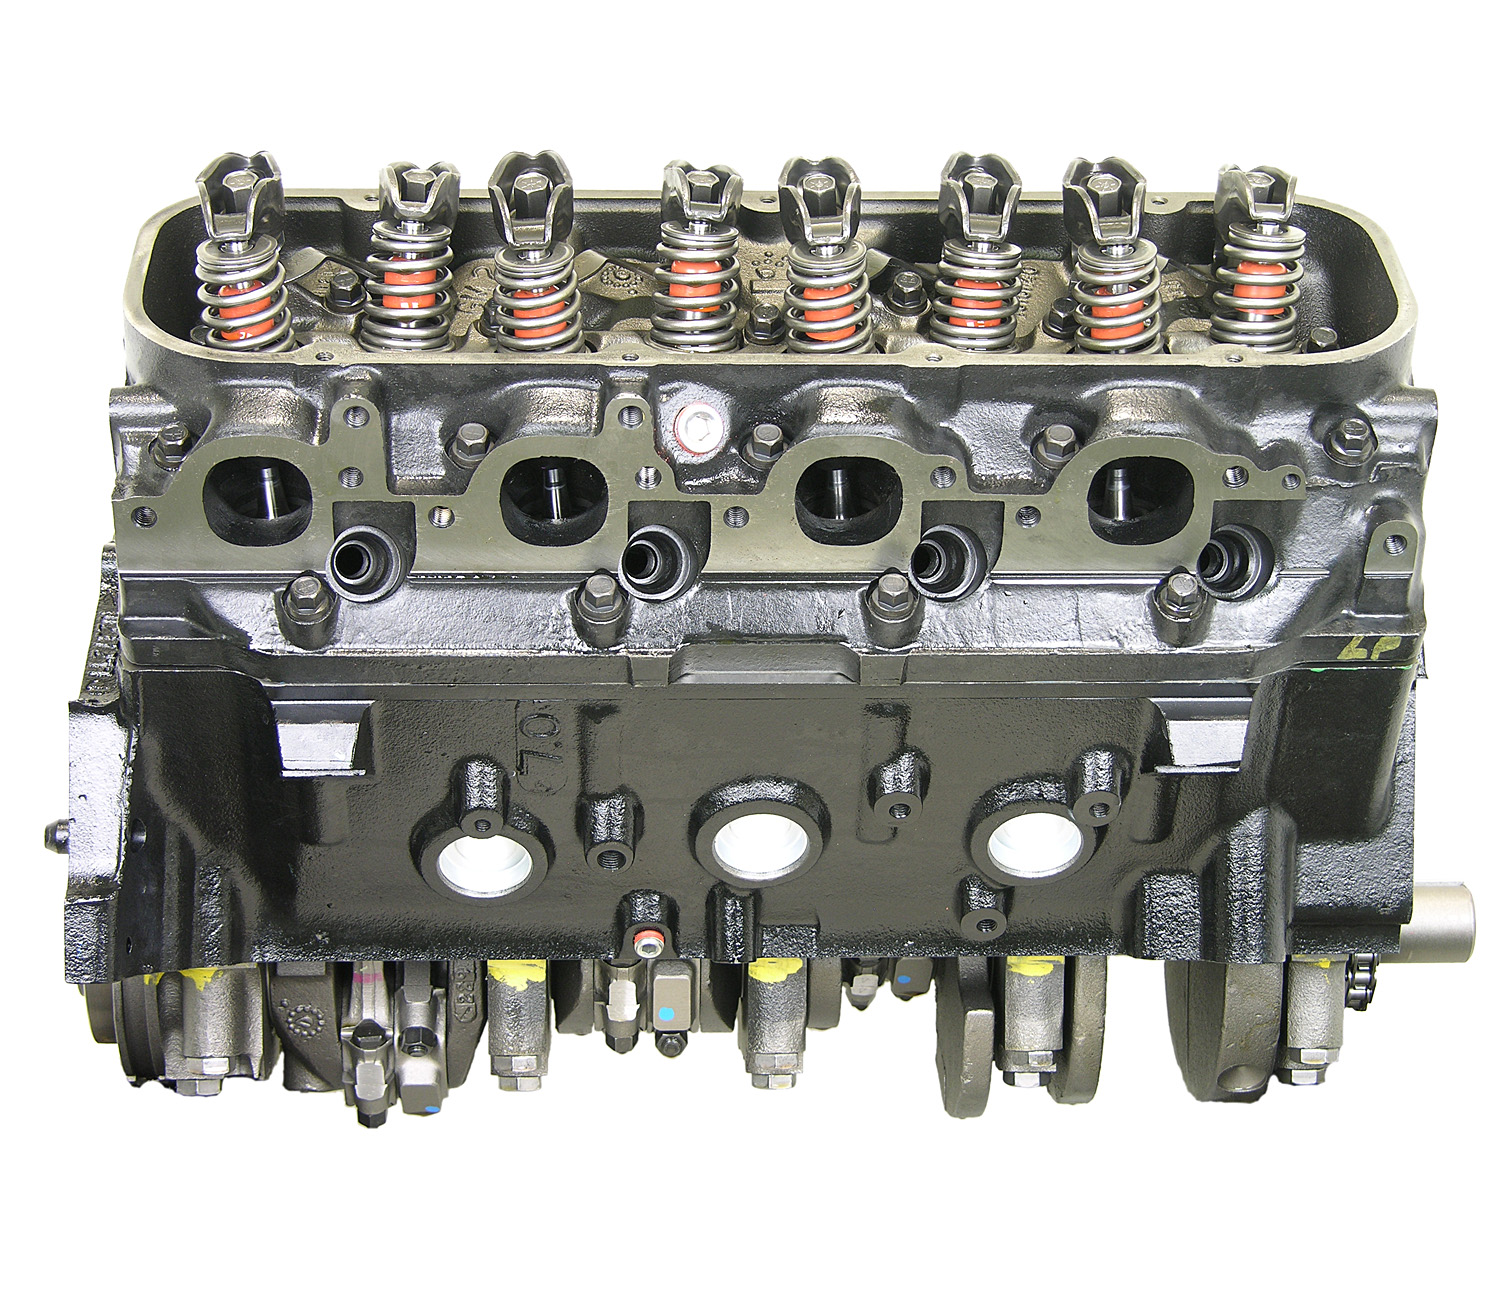 Chevy 7.0L V8 Remanufactured Engine - 1996-1998